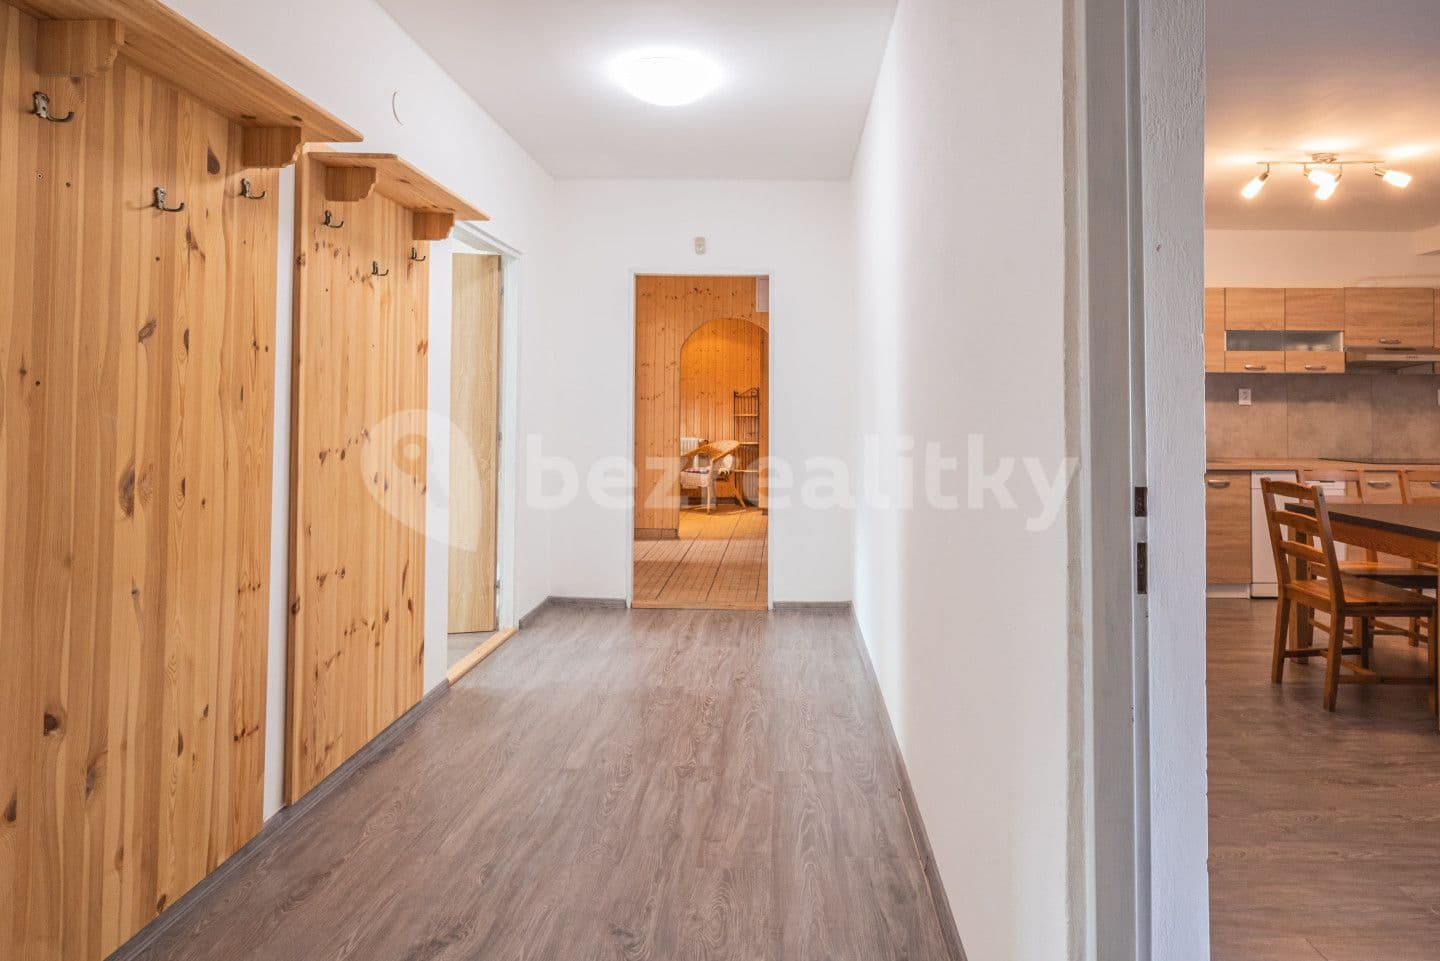 Predaj bytu 4-izbový 111 m², Staré Město, Moravskoslezský kraj